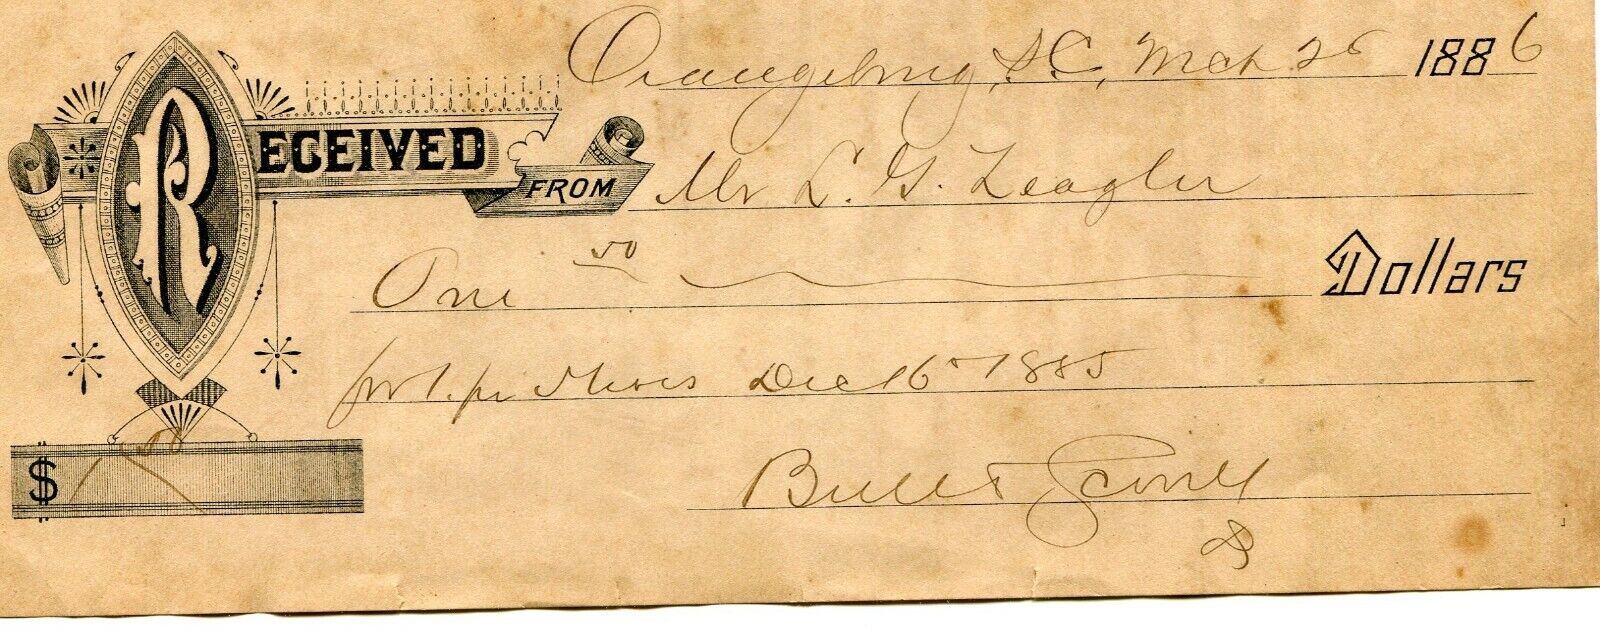 1886 RECEIPT BULL & SCOVILL ORANGEBURG SC  TO MR L G ZEAGLER 